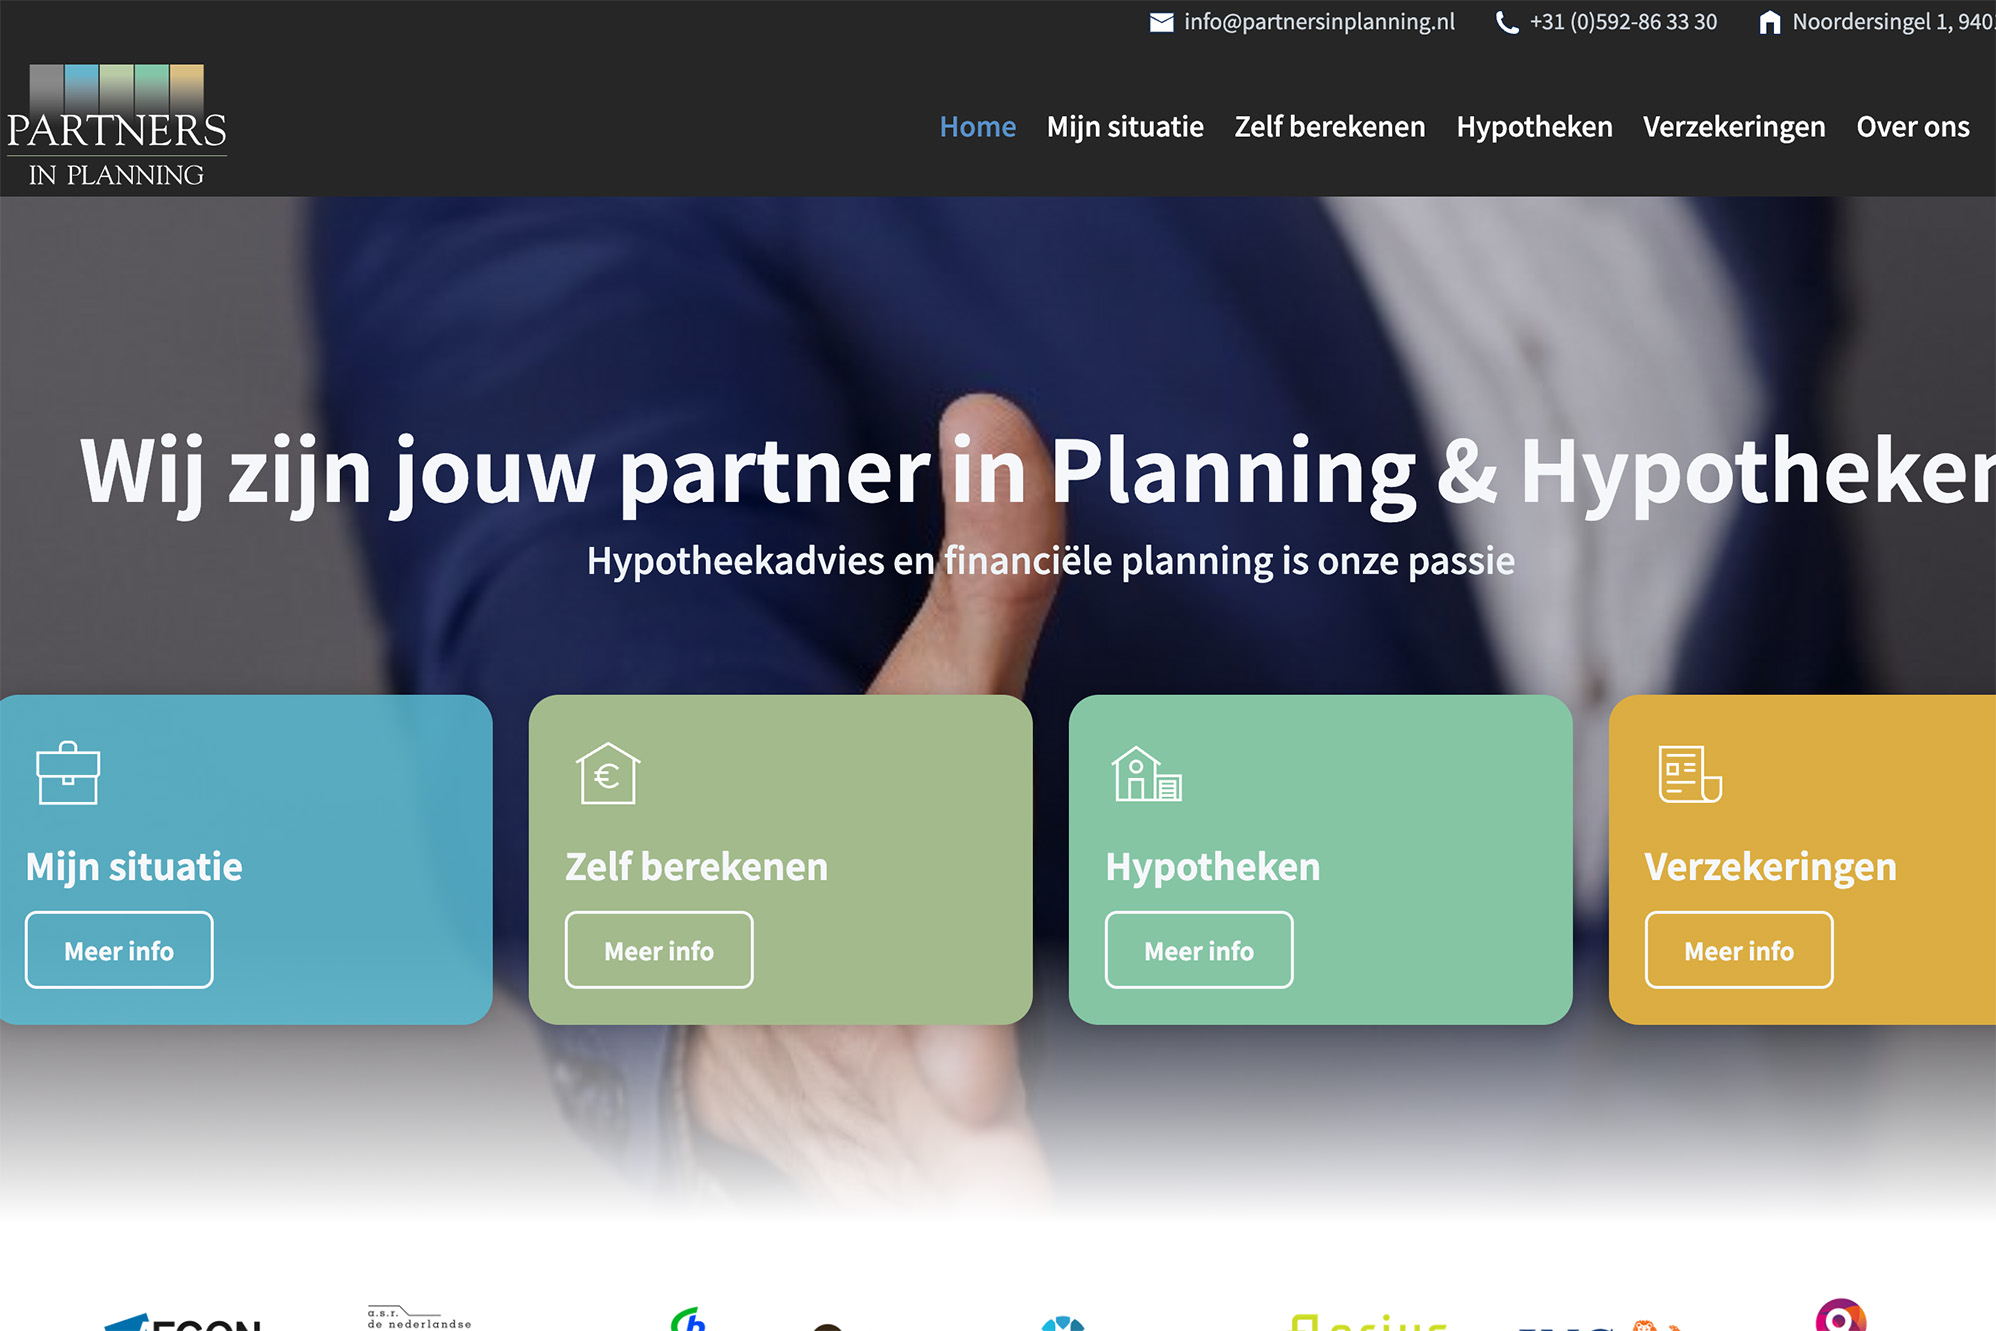 (c) Partnersinplanning.nl